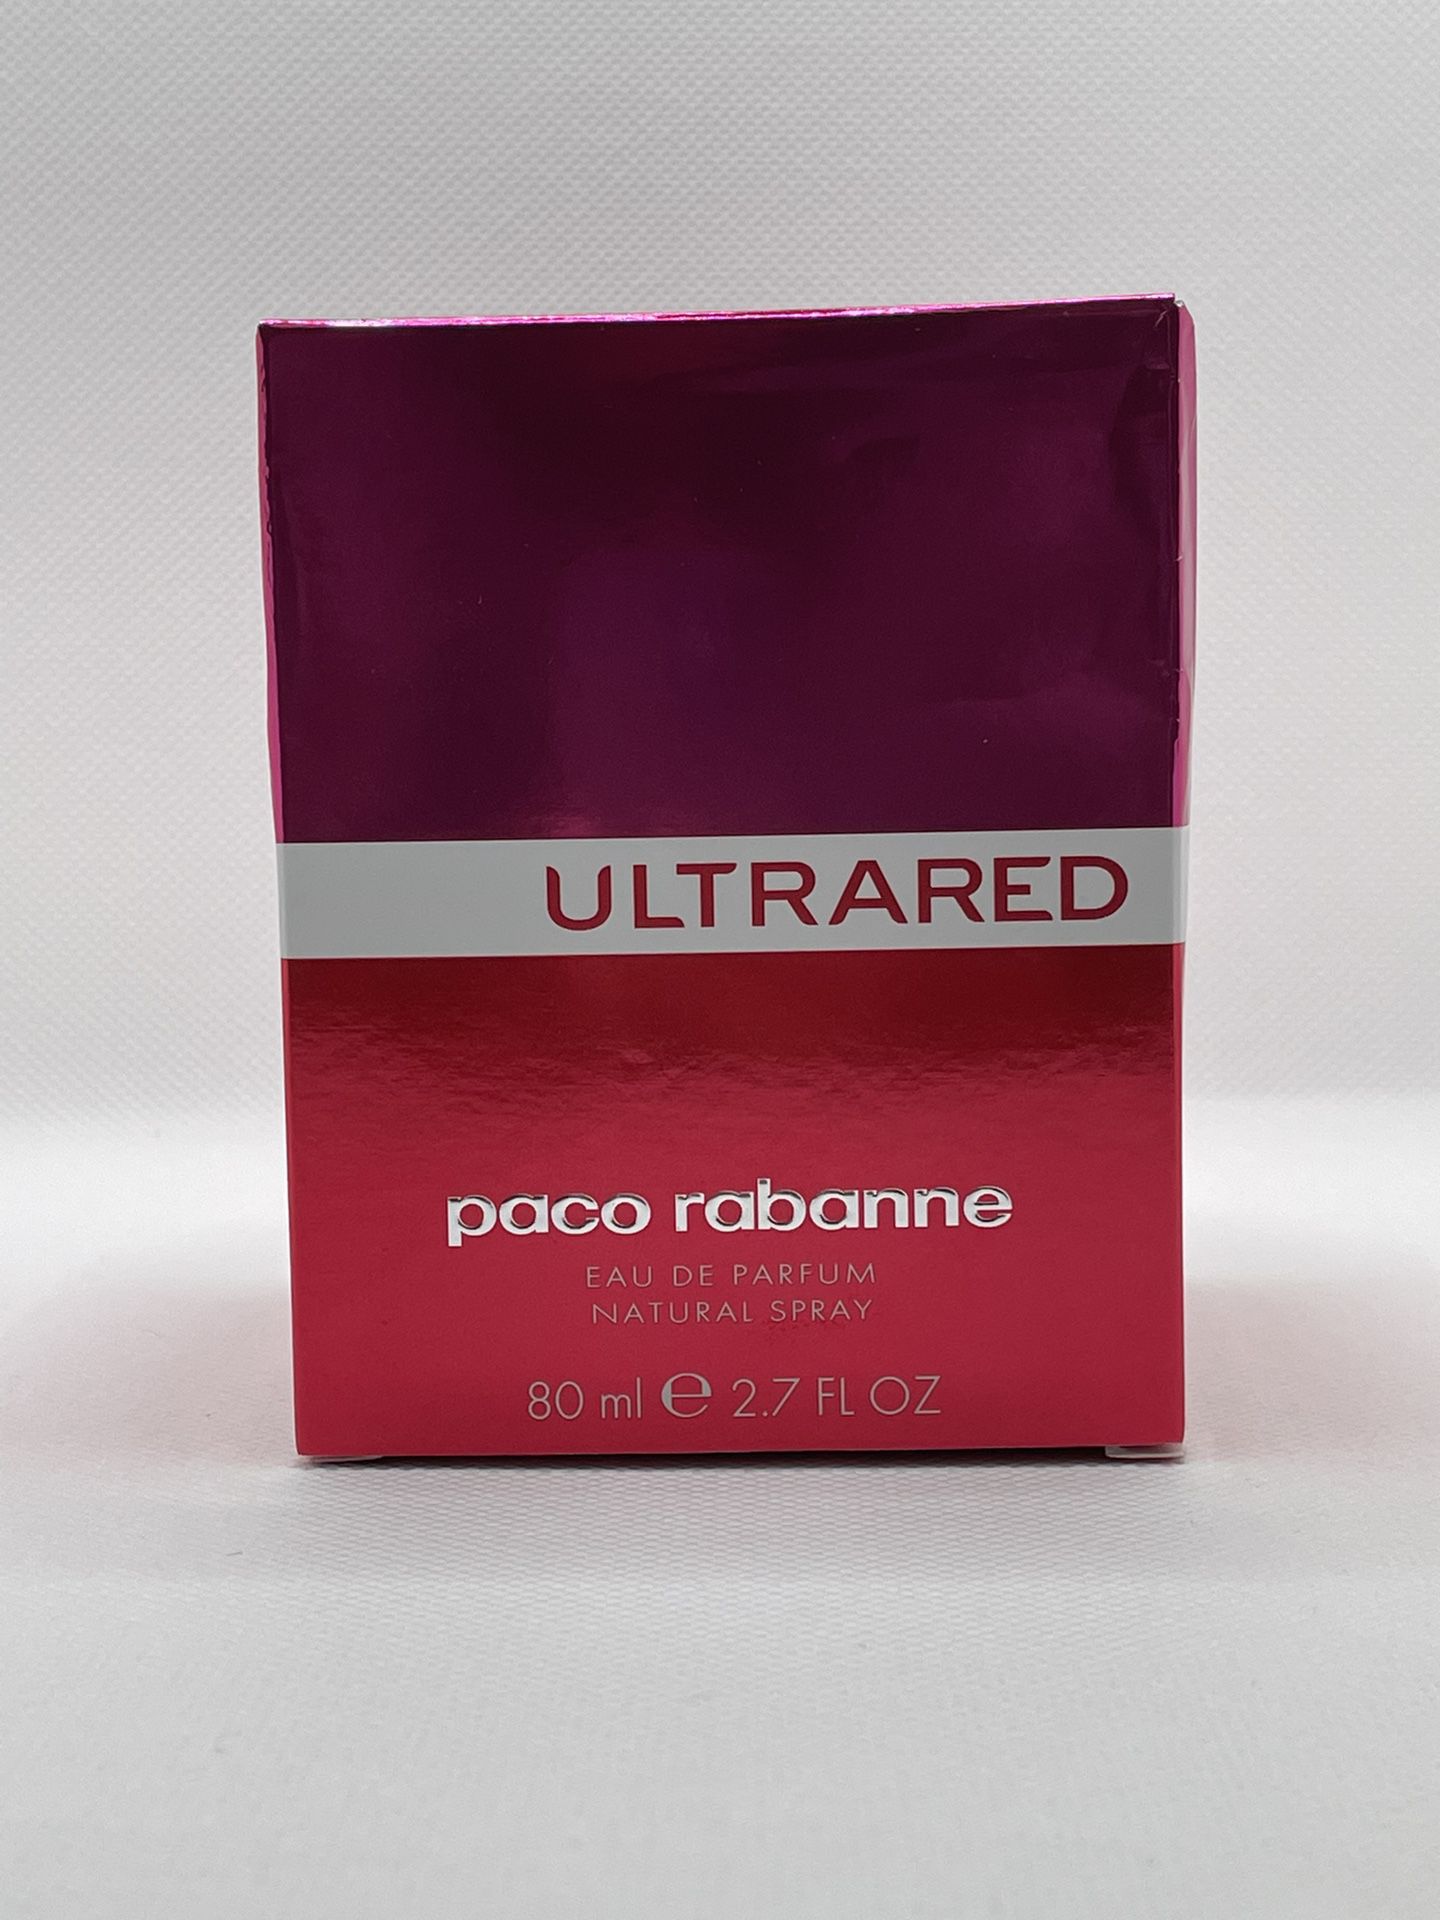 Ultrared Perfume by Paco Rabanne 2.7 oz EDP Spray for Women Damaged Box